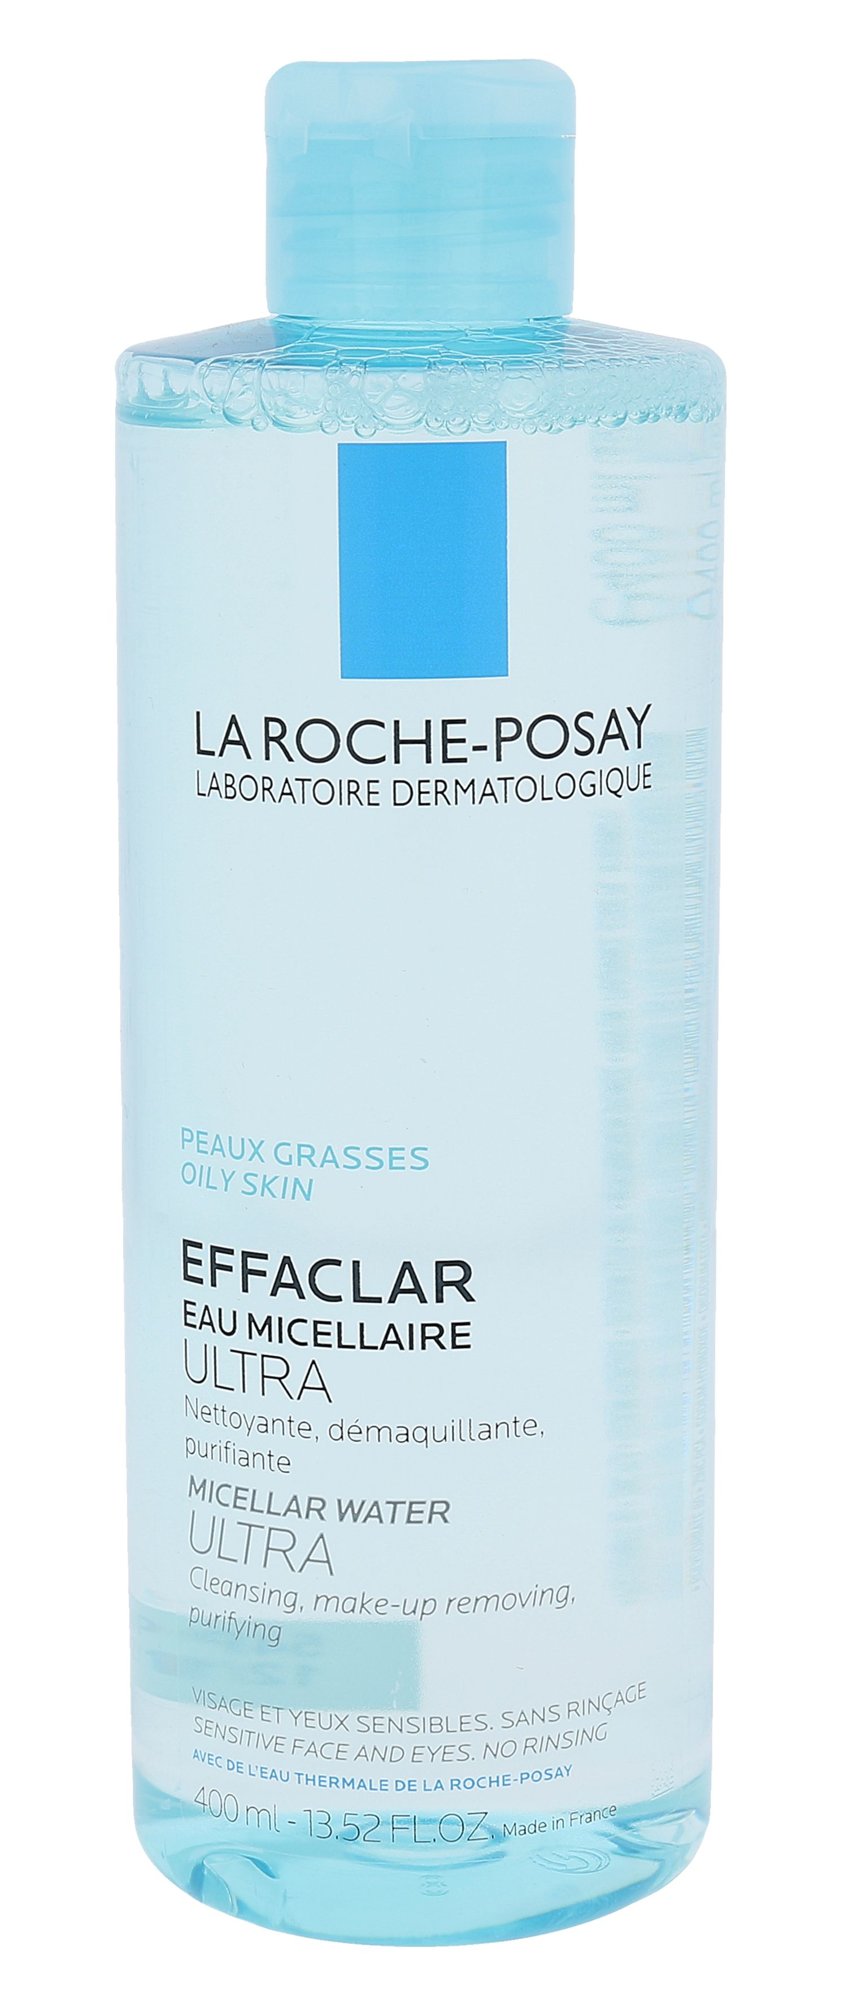 La Roche-Posay Effaclar Purifying Micellar Water